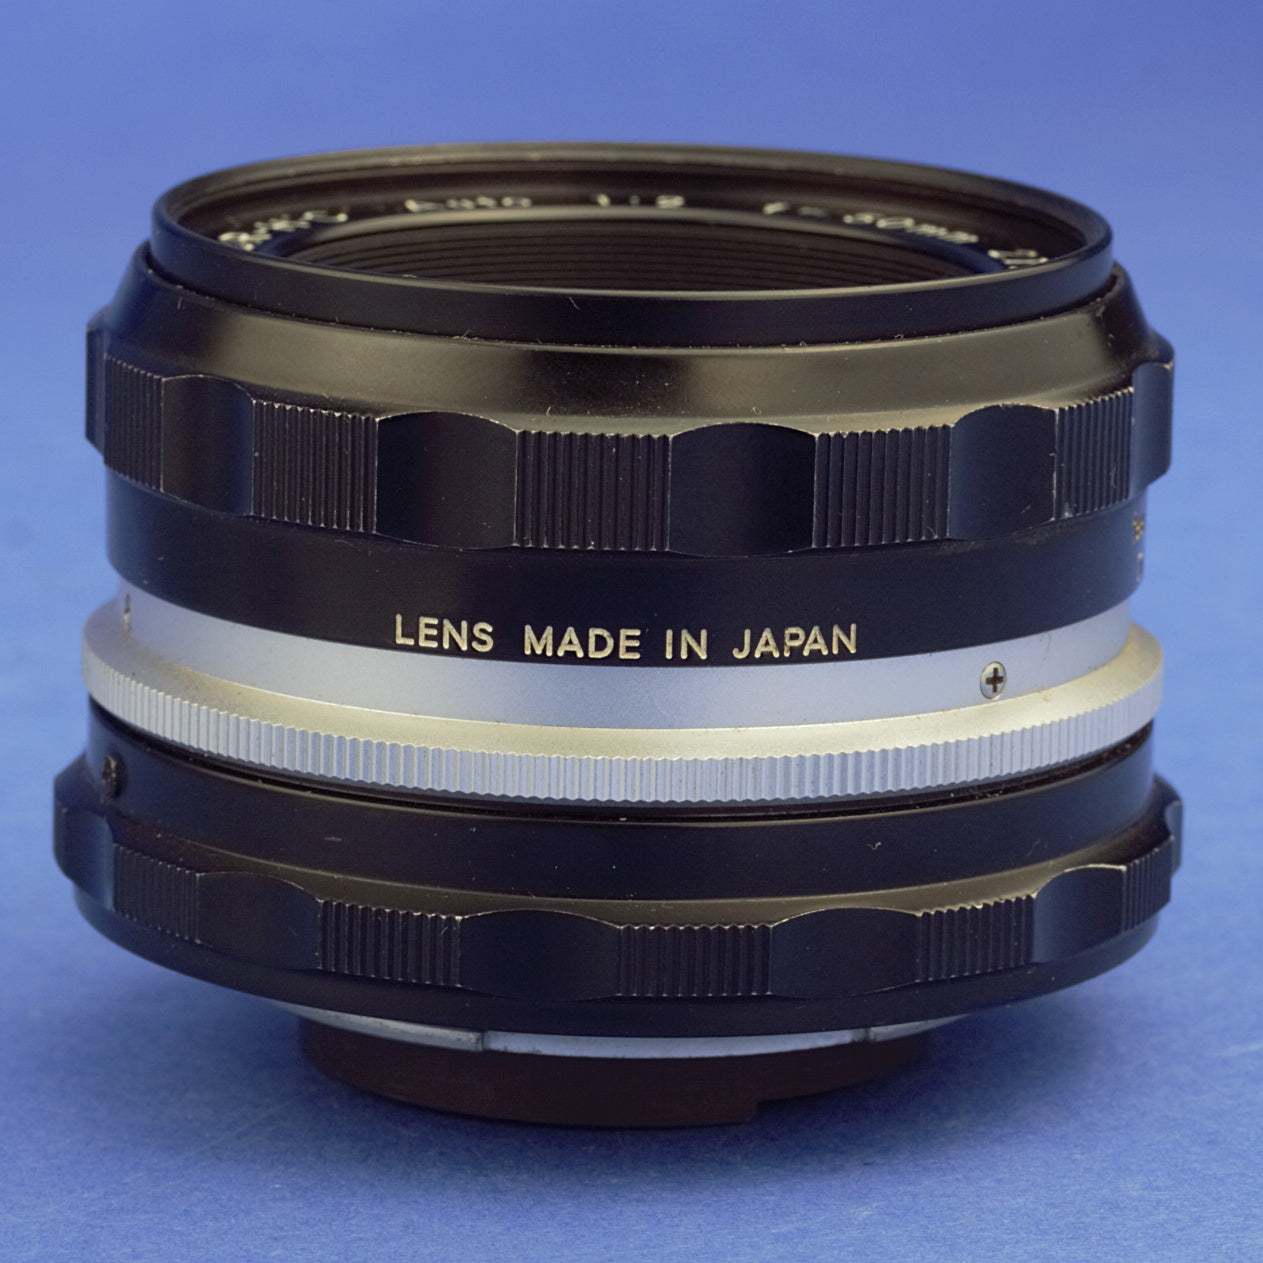 Nikon Nikkor 50mm F2 Non-Ai Lens